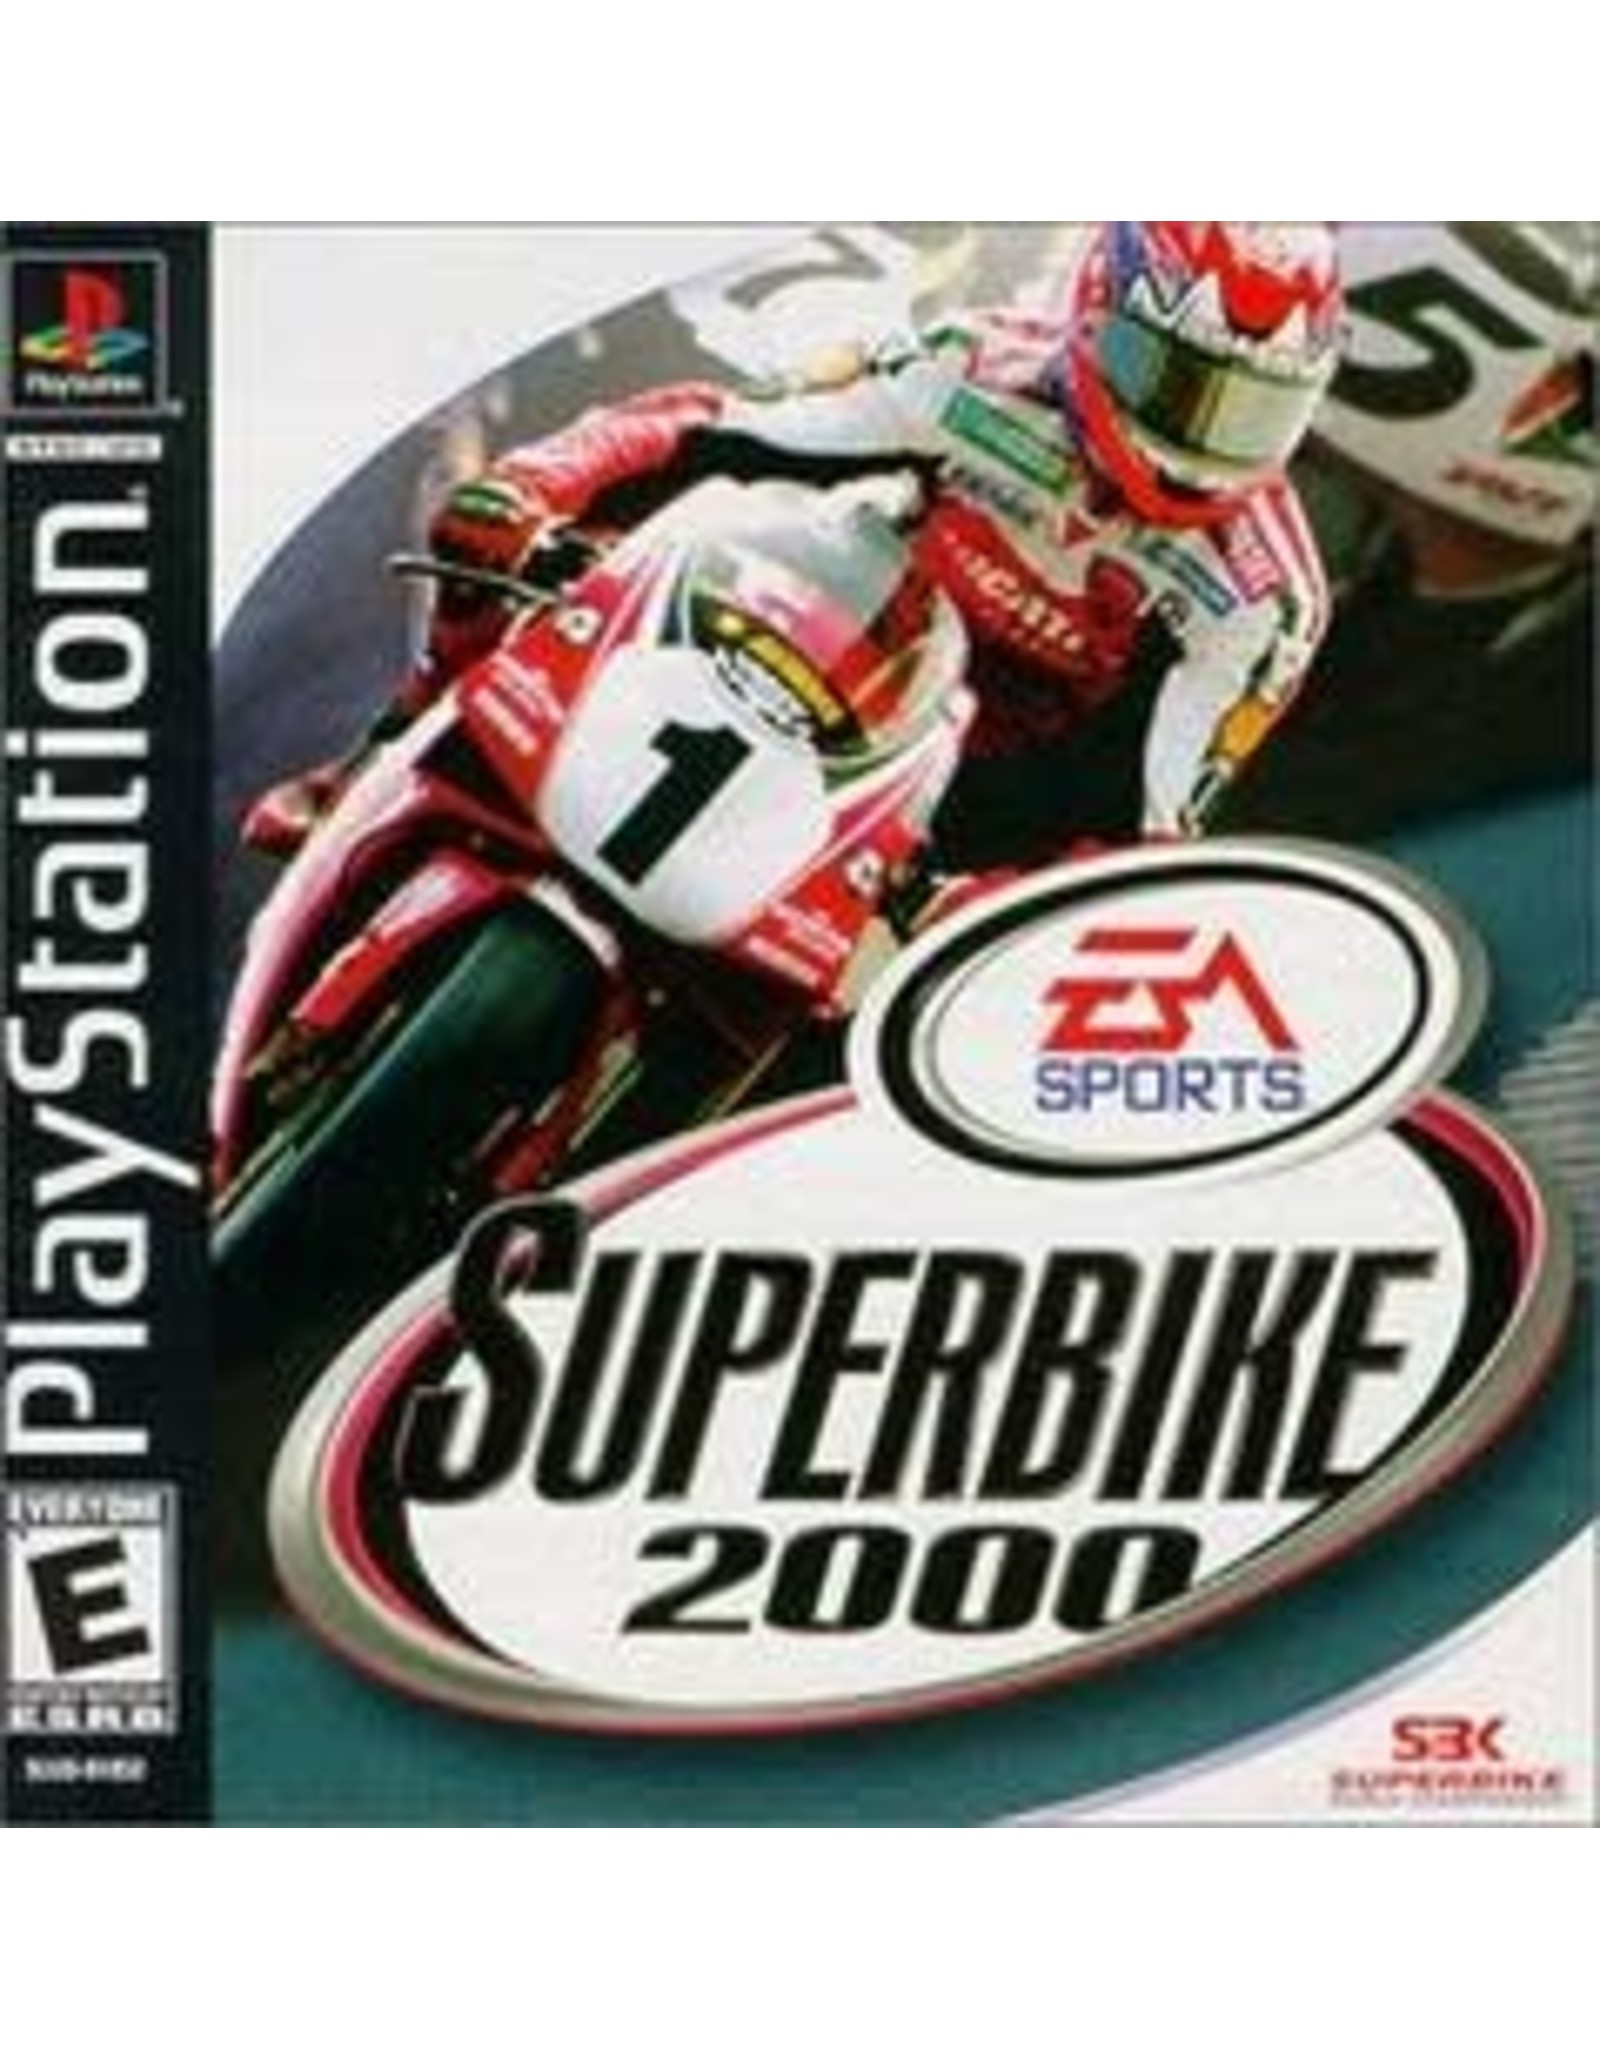 Playstation Superbike 2000 (CIB)